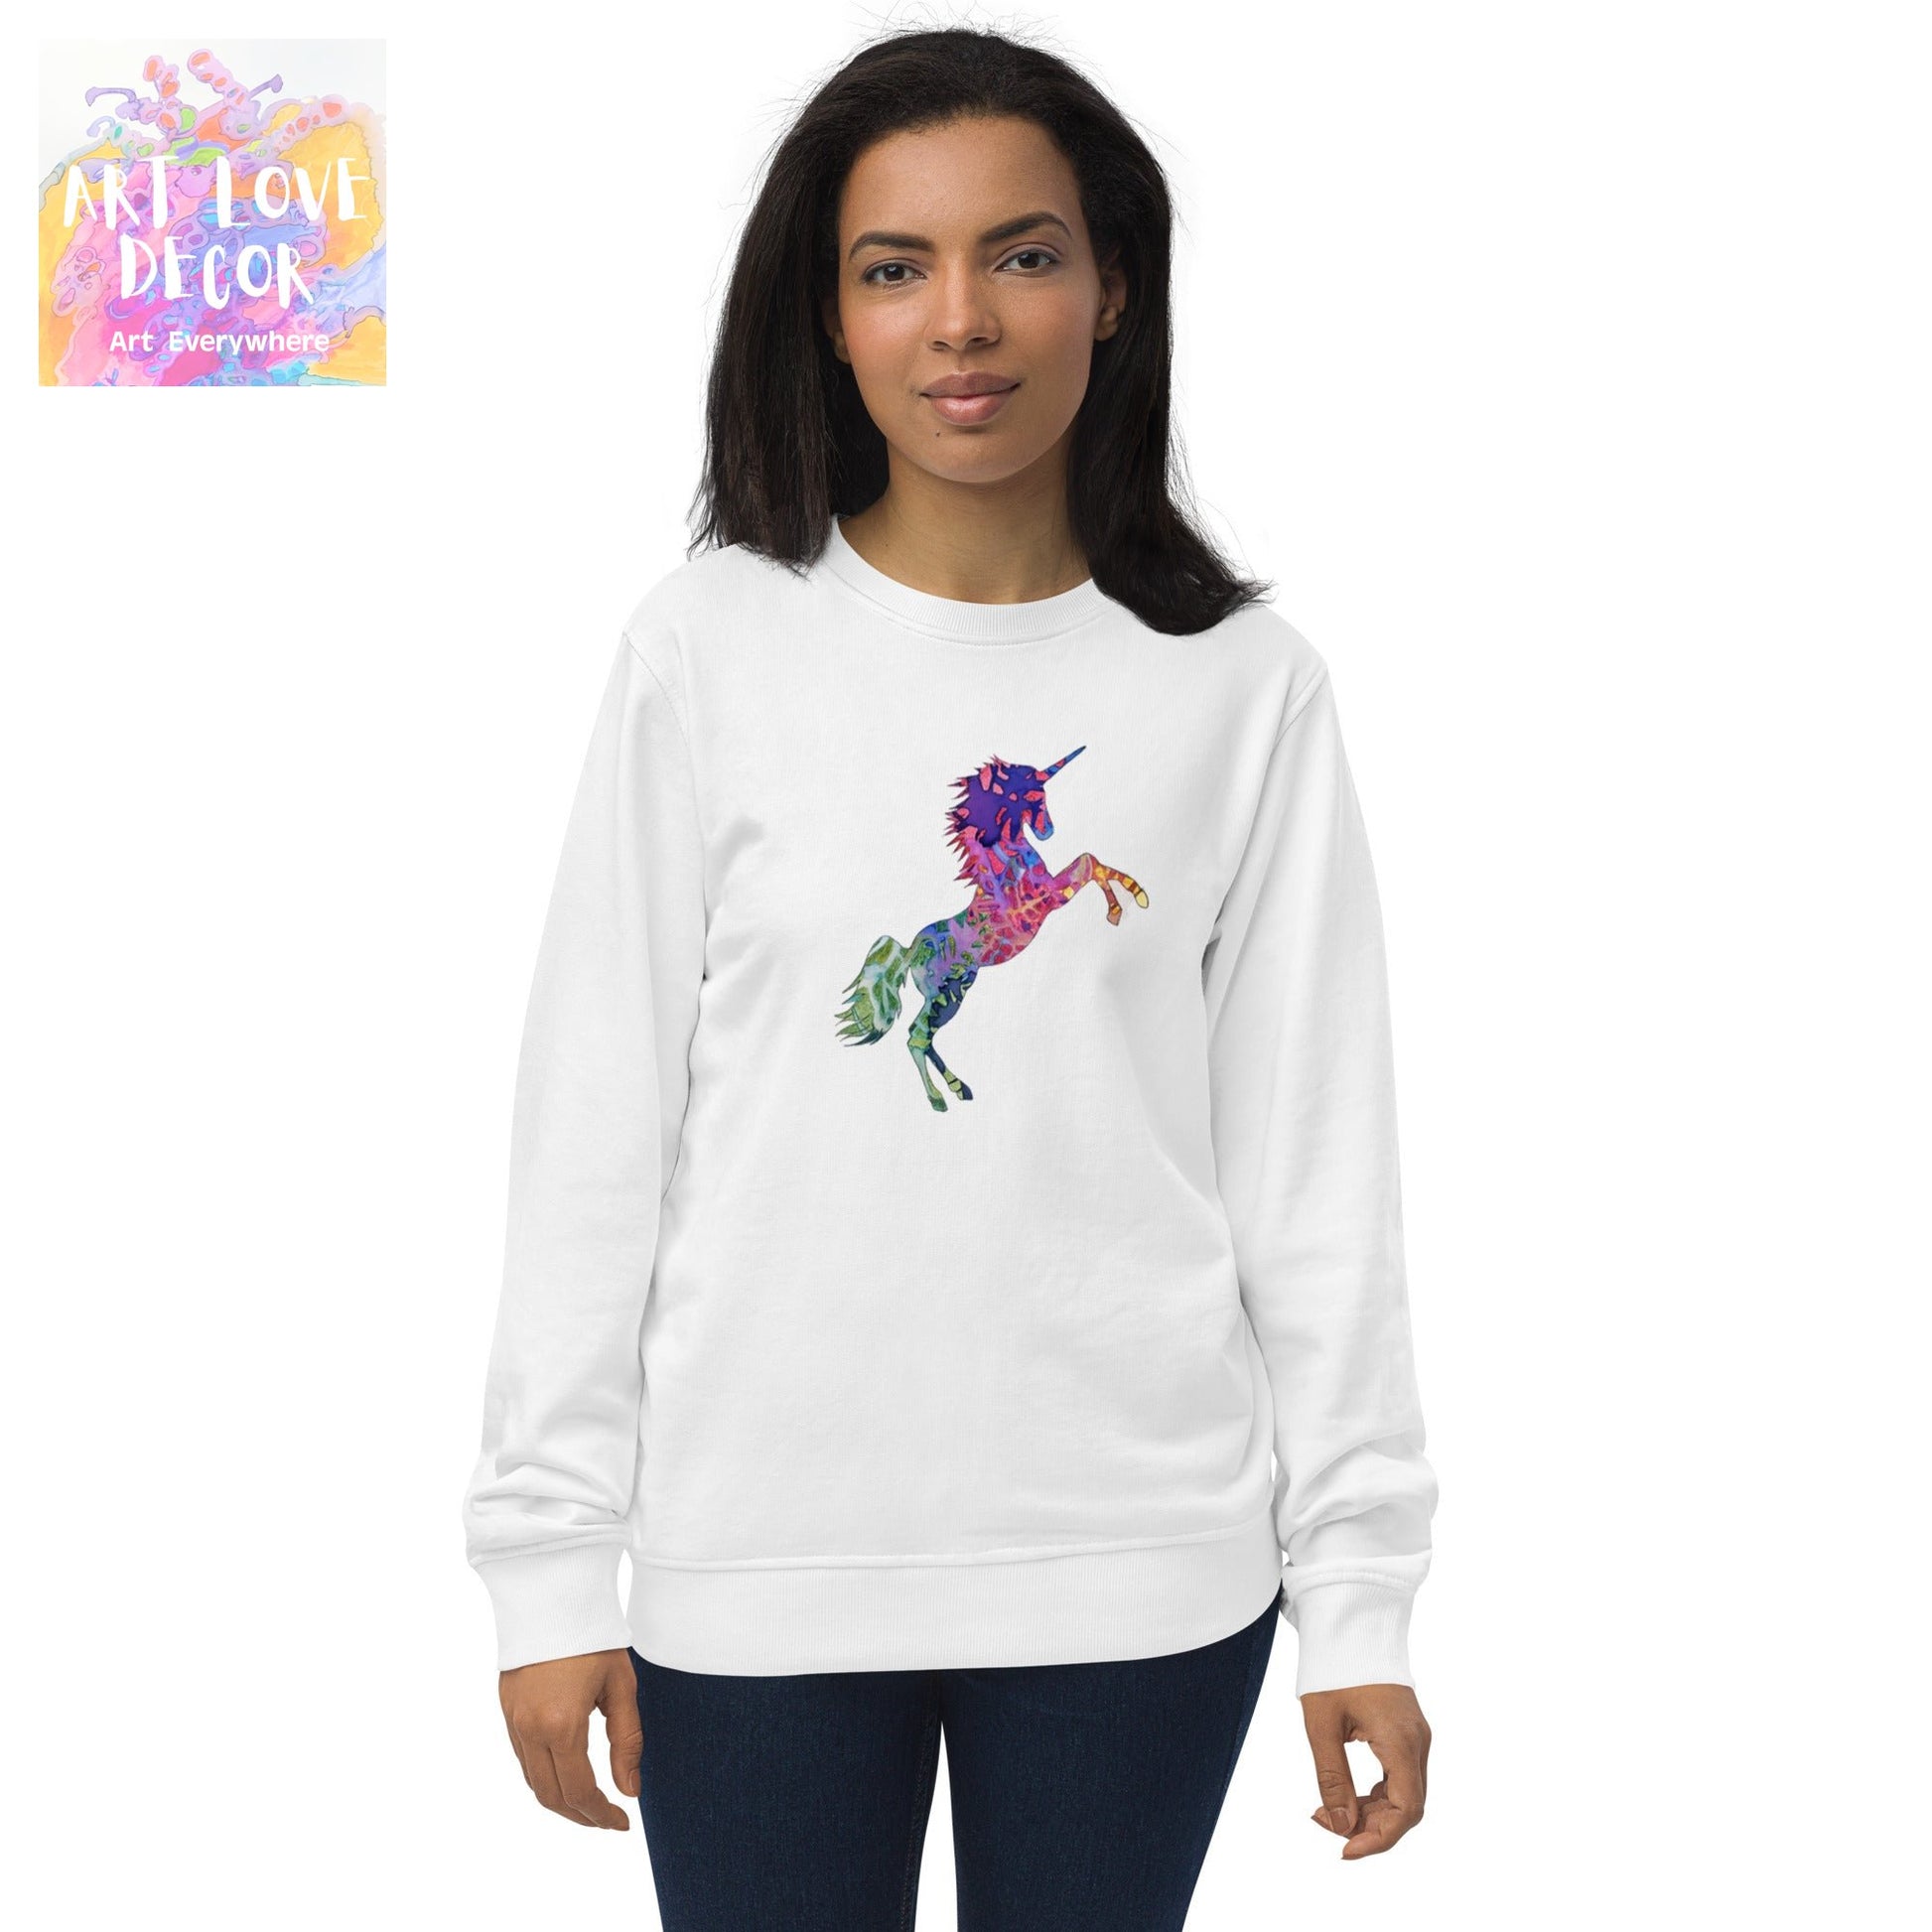 Bucking Horse Unicorn Women's Sweatshirt - Art Love Decor